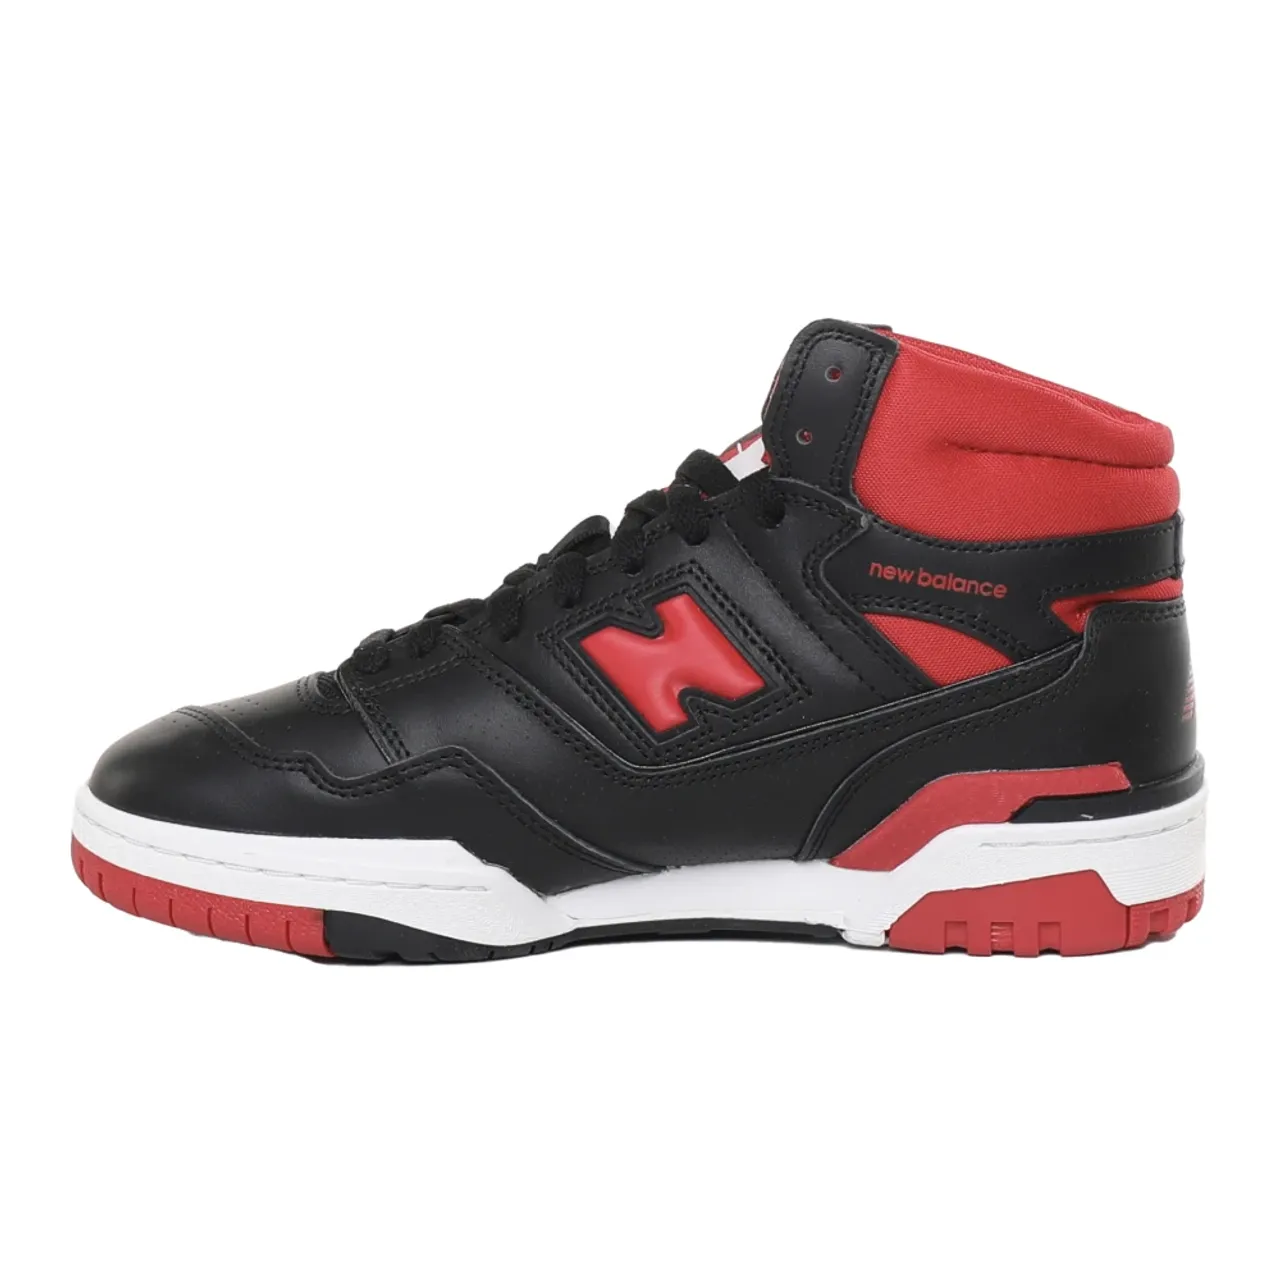 Schwarze Ledersneakers mit roten Akzenten New Balance